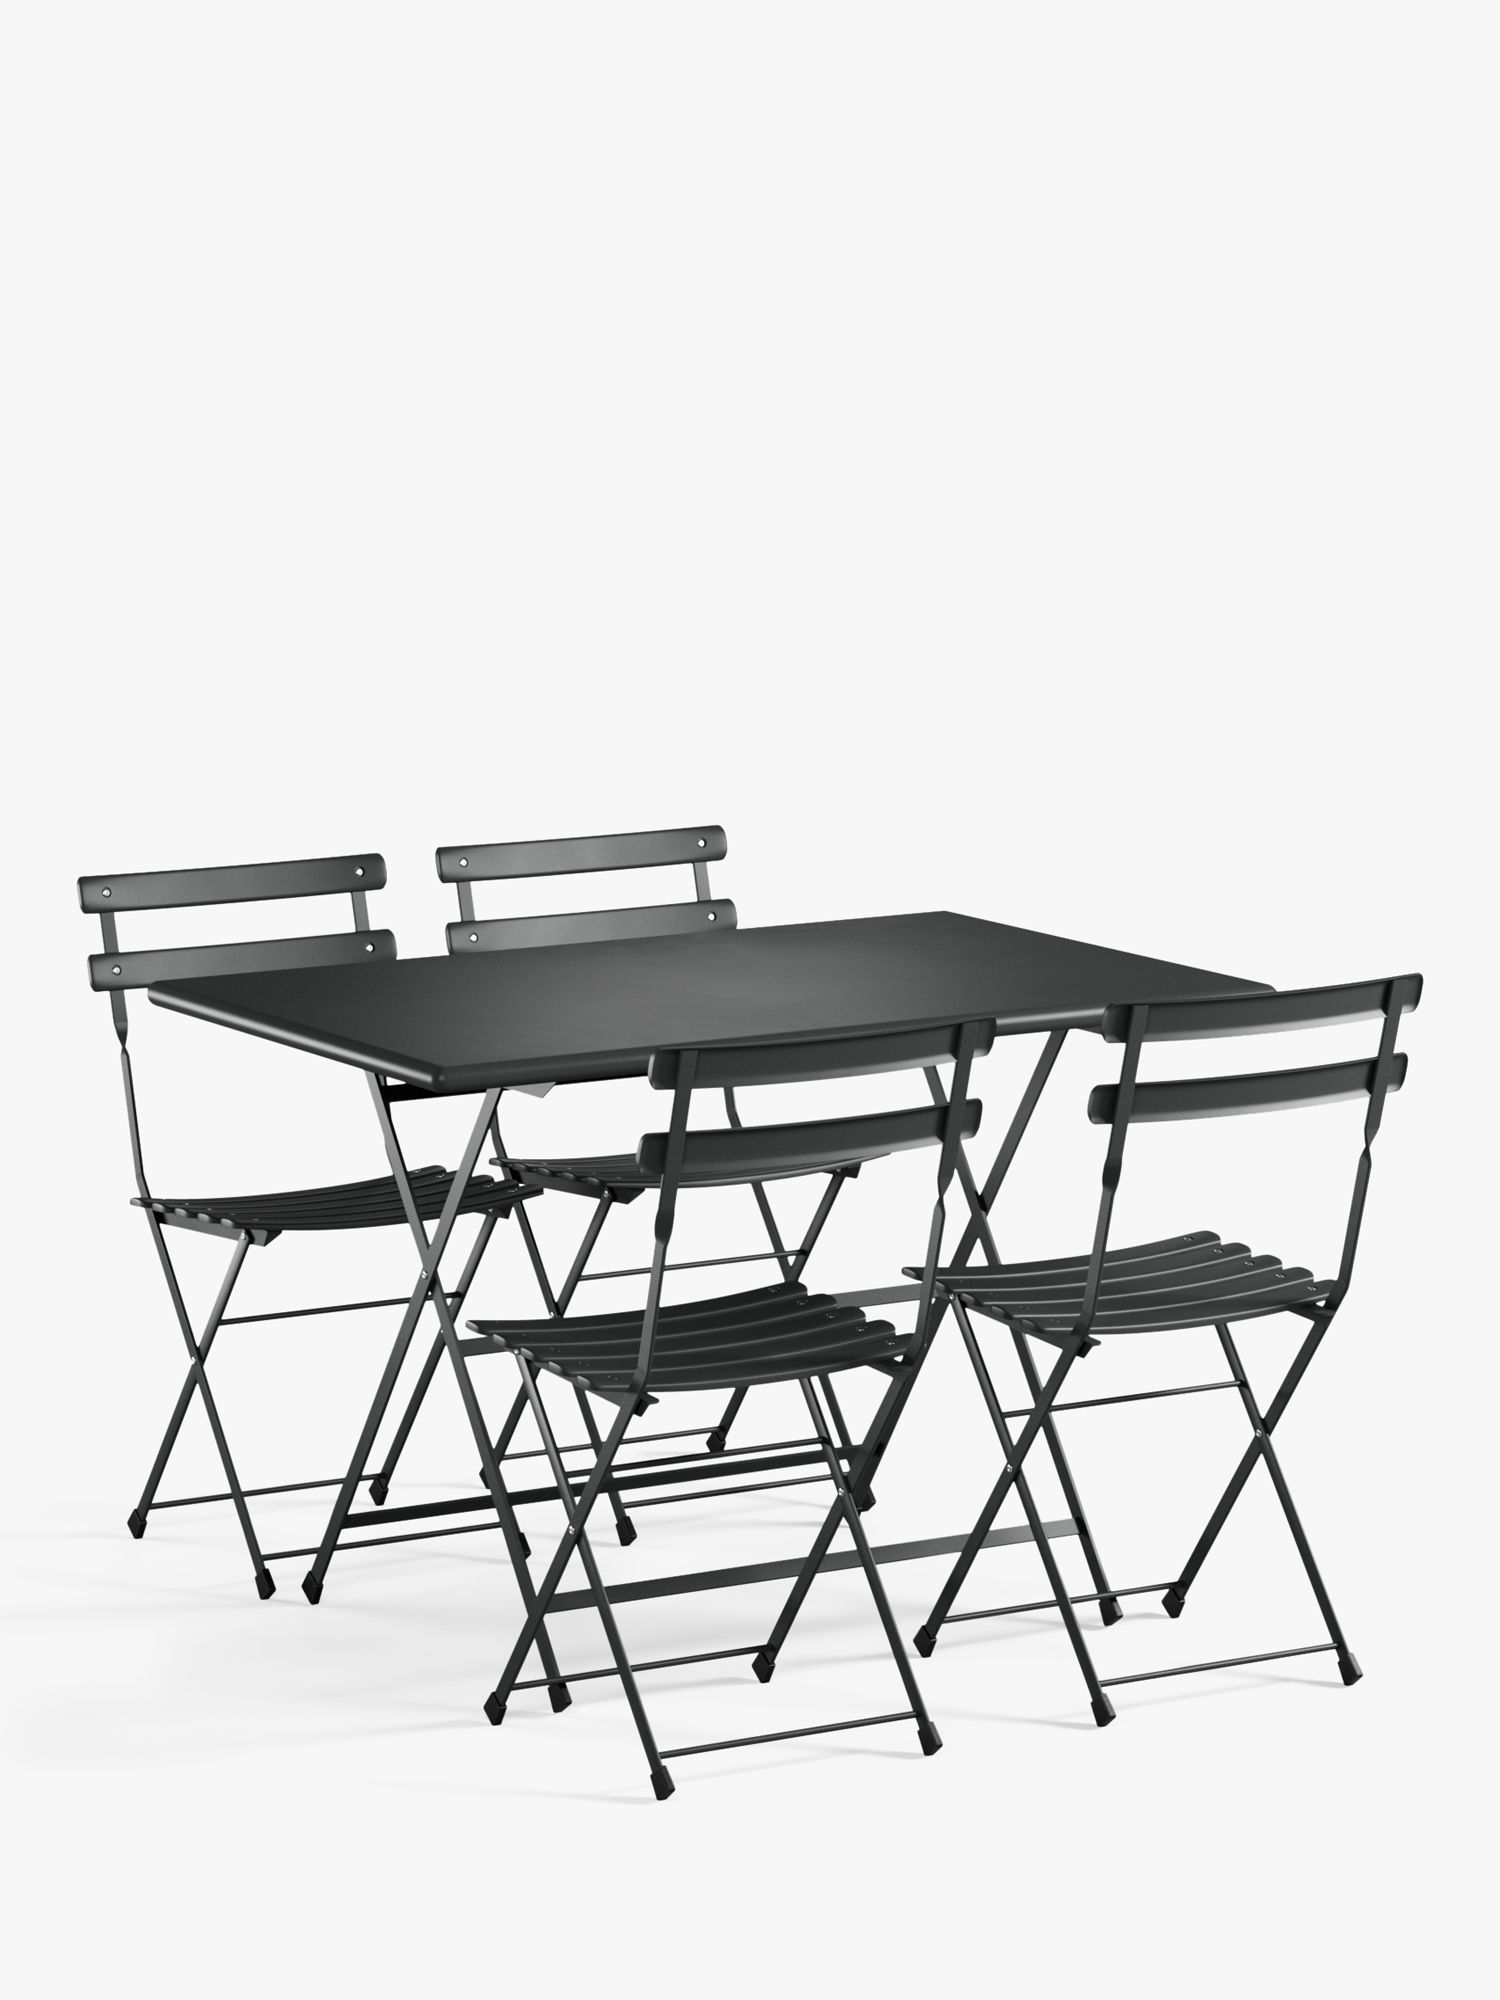 EMU Arc En Ciel Steel 4-Seater Folding Garden Rectangular Dining Table and Chairs Set, Iron